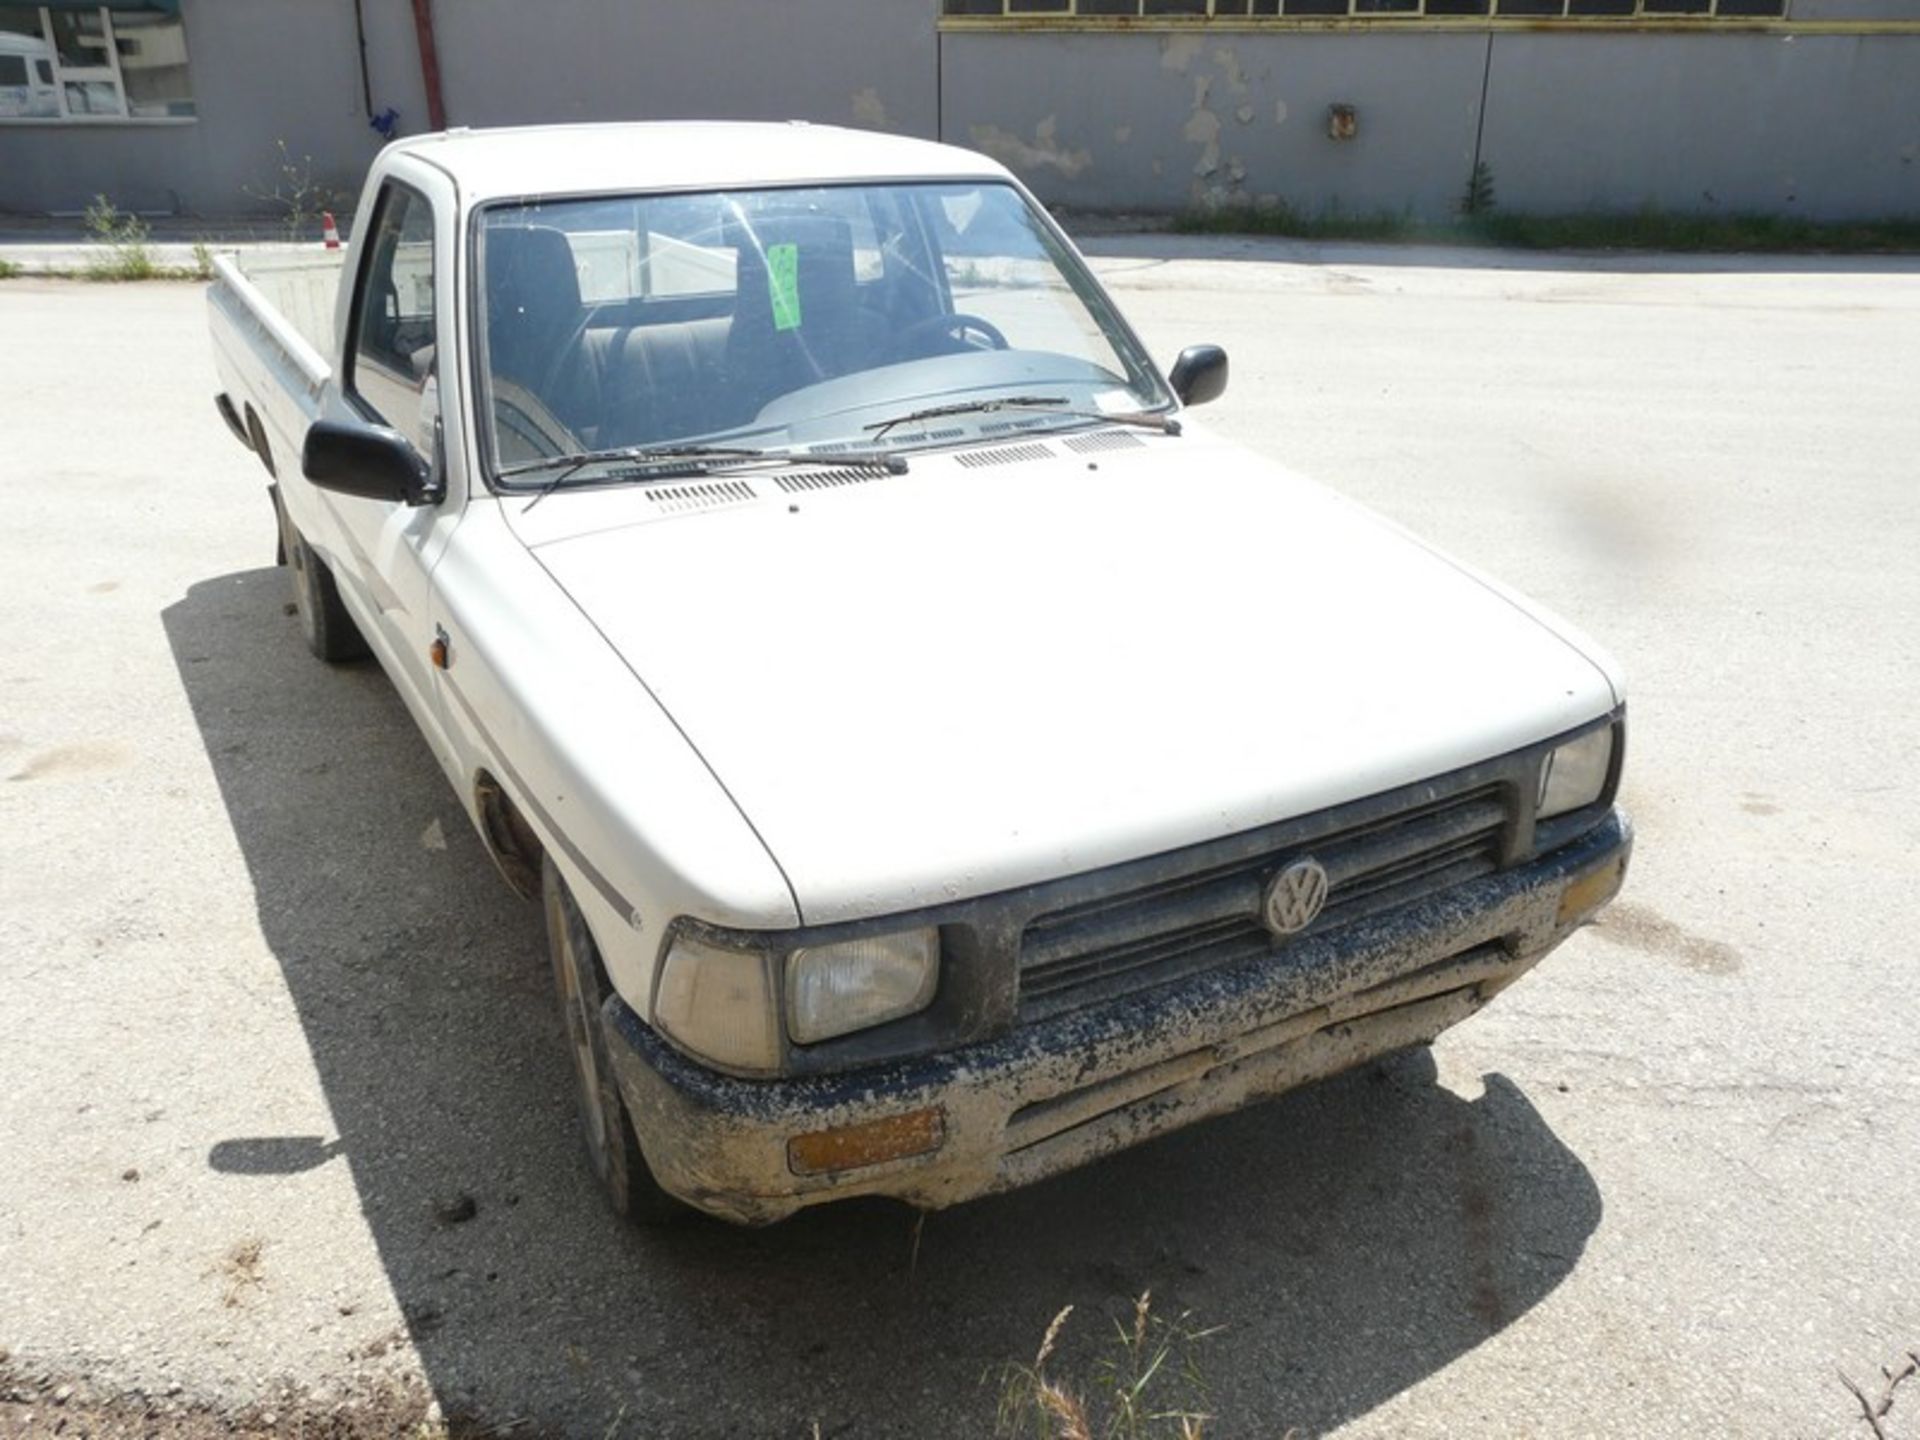 VW TARO 2,4D, KM: 186970, DIESEL, REG: NBY 4241, Year: 1996 (Located in Greece - Orestiada) Greek - Bild 4 aus 9